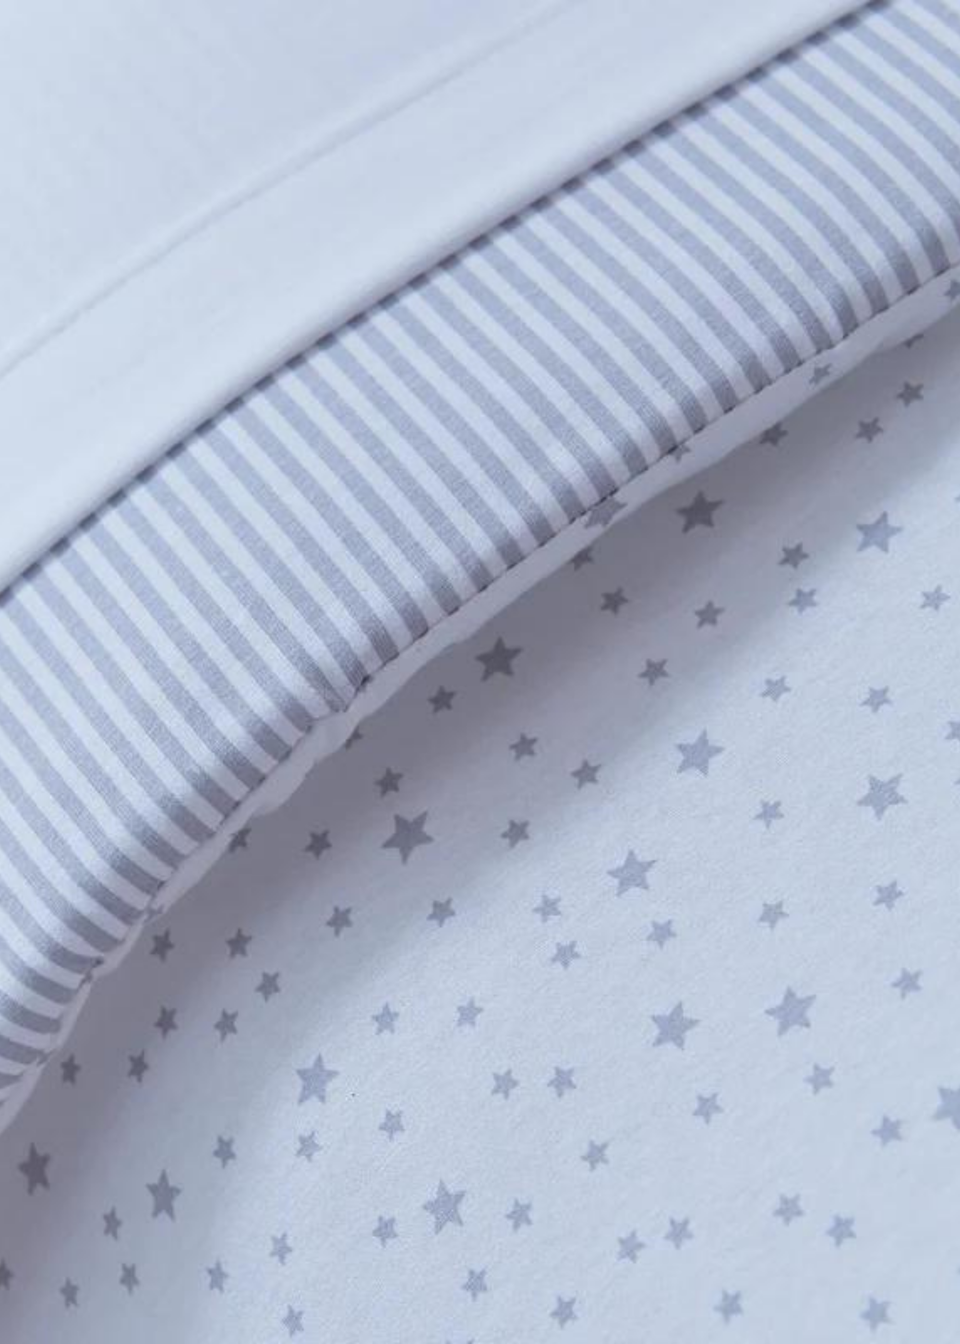 Clair de Lune Grey Stars & Stripes Cot Bed Quilt & Bumper Bedding Set